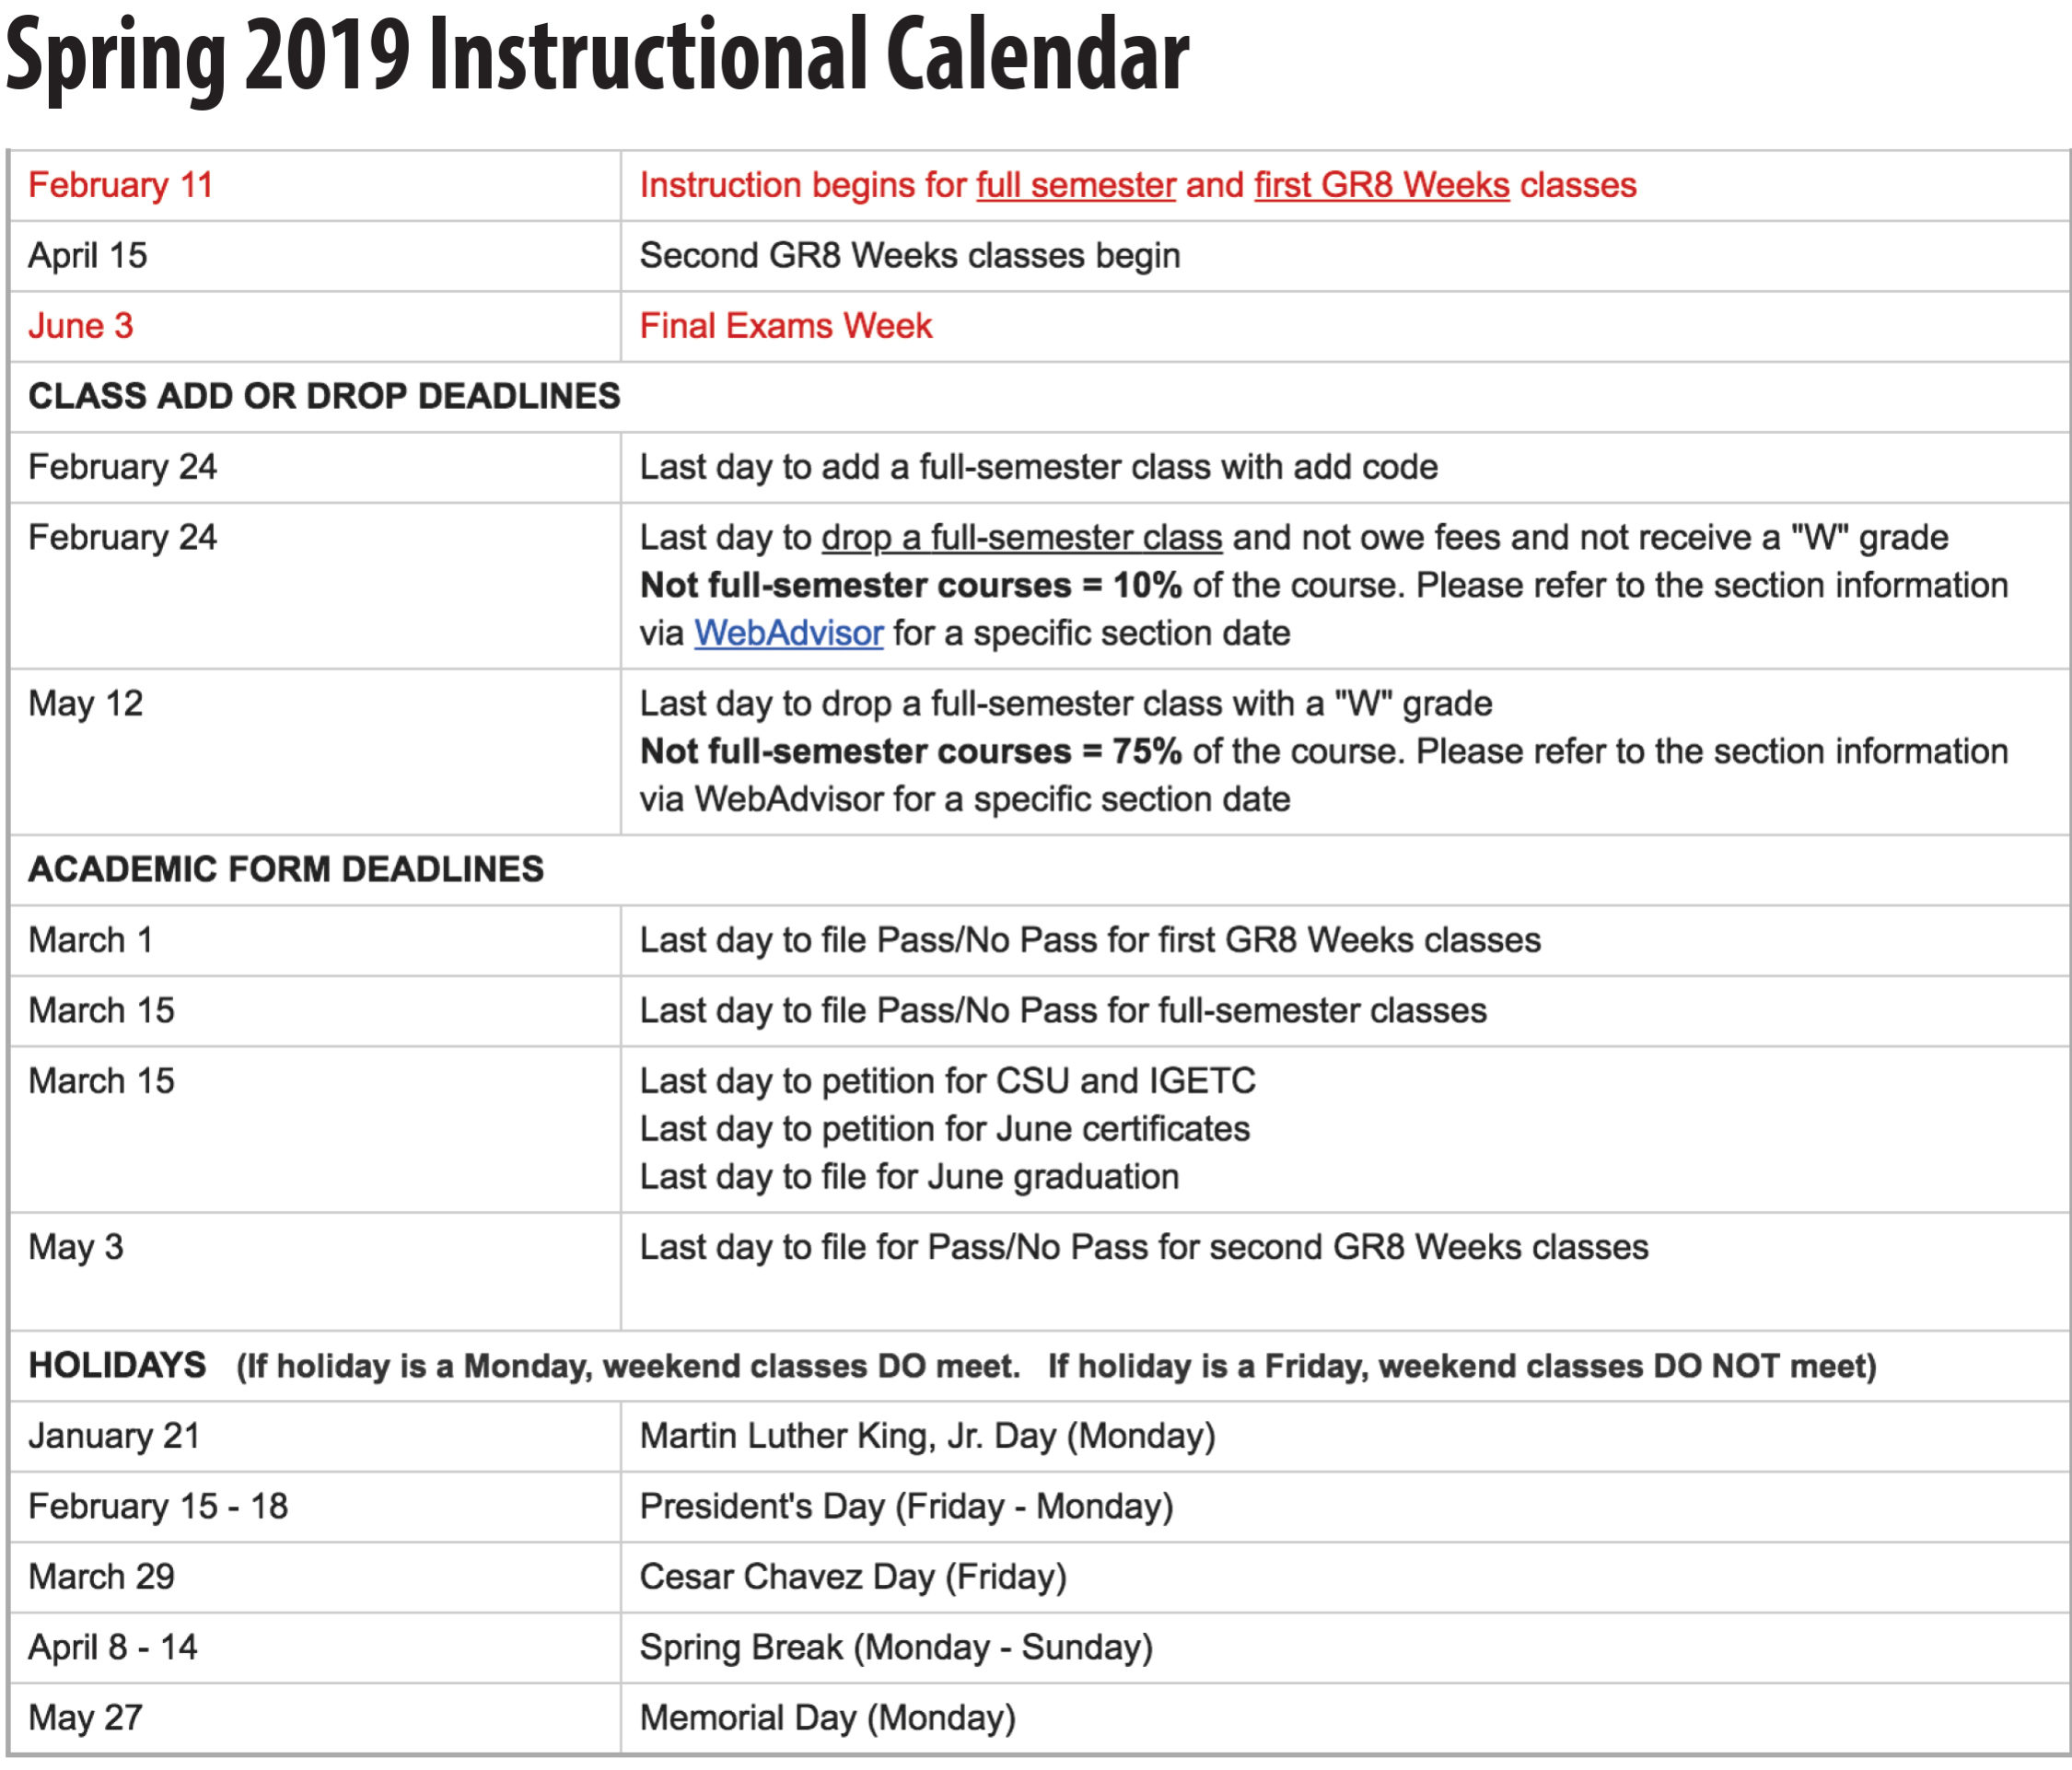 Santa-ana-college-SPRING-2019-Calendar.jpg